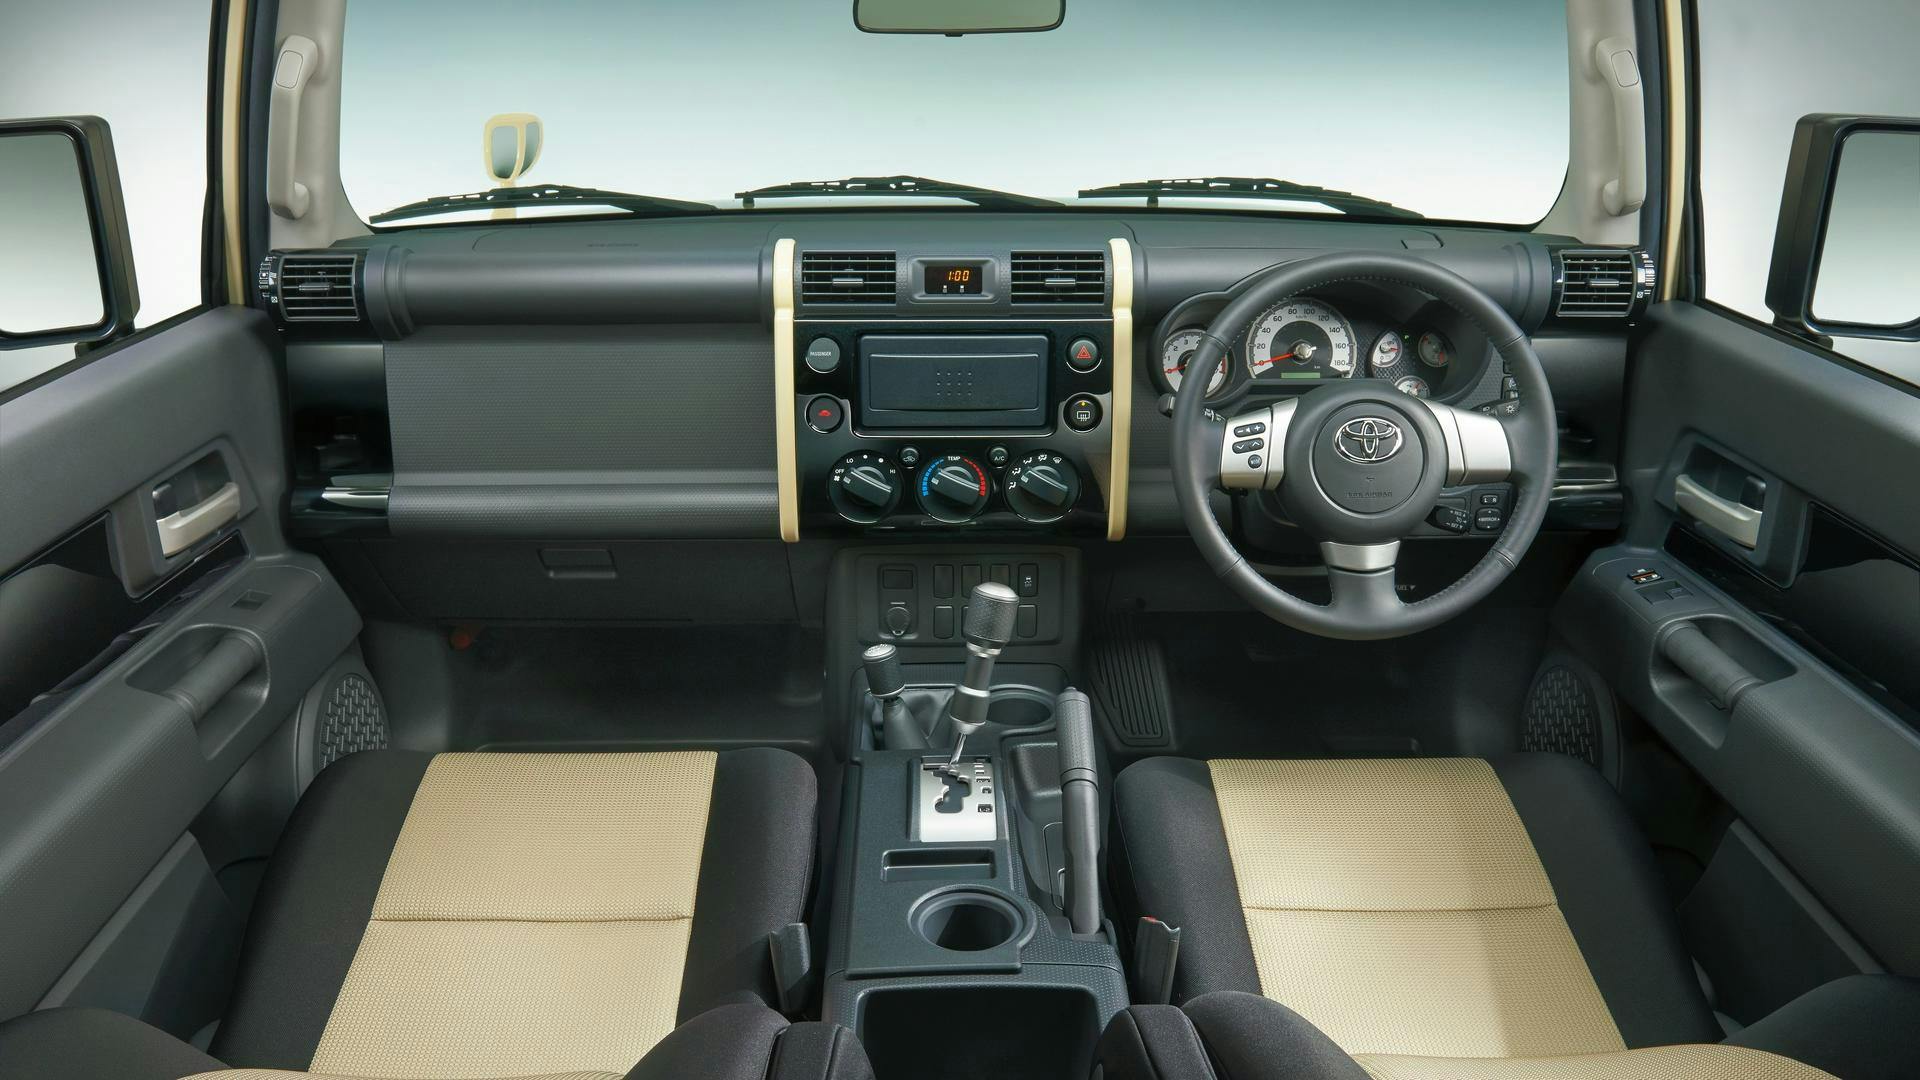 Toyota FJ Cruiser Final Edition interior detail